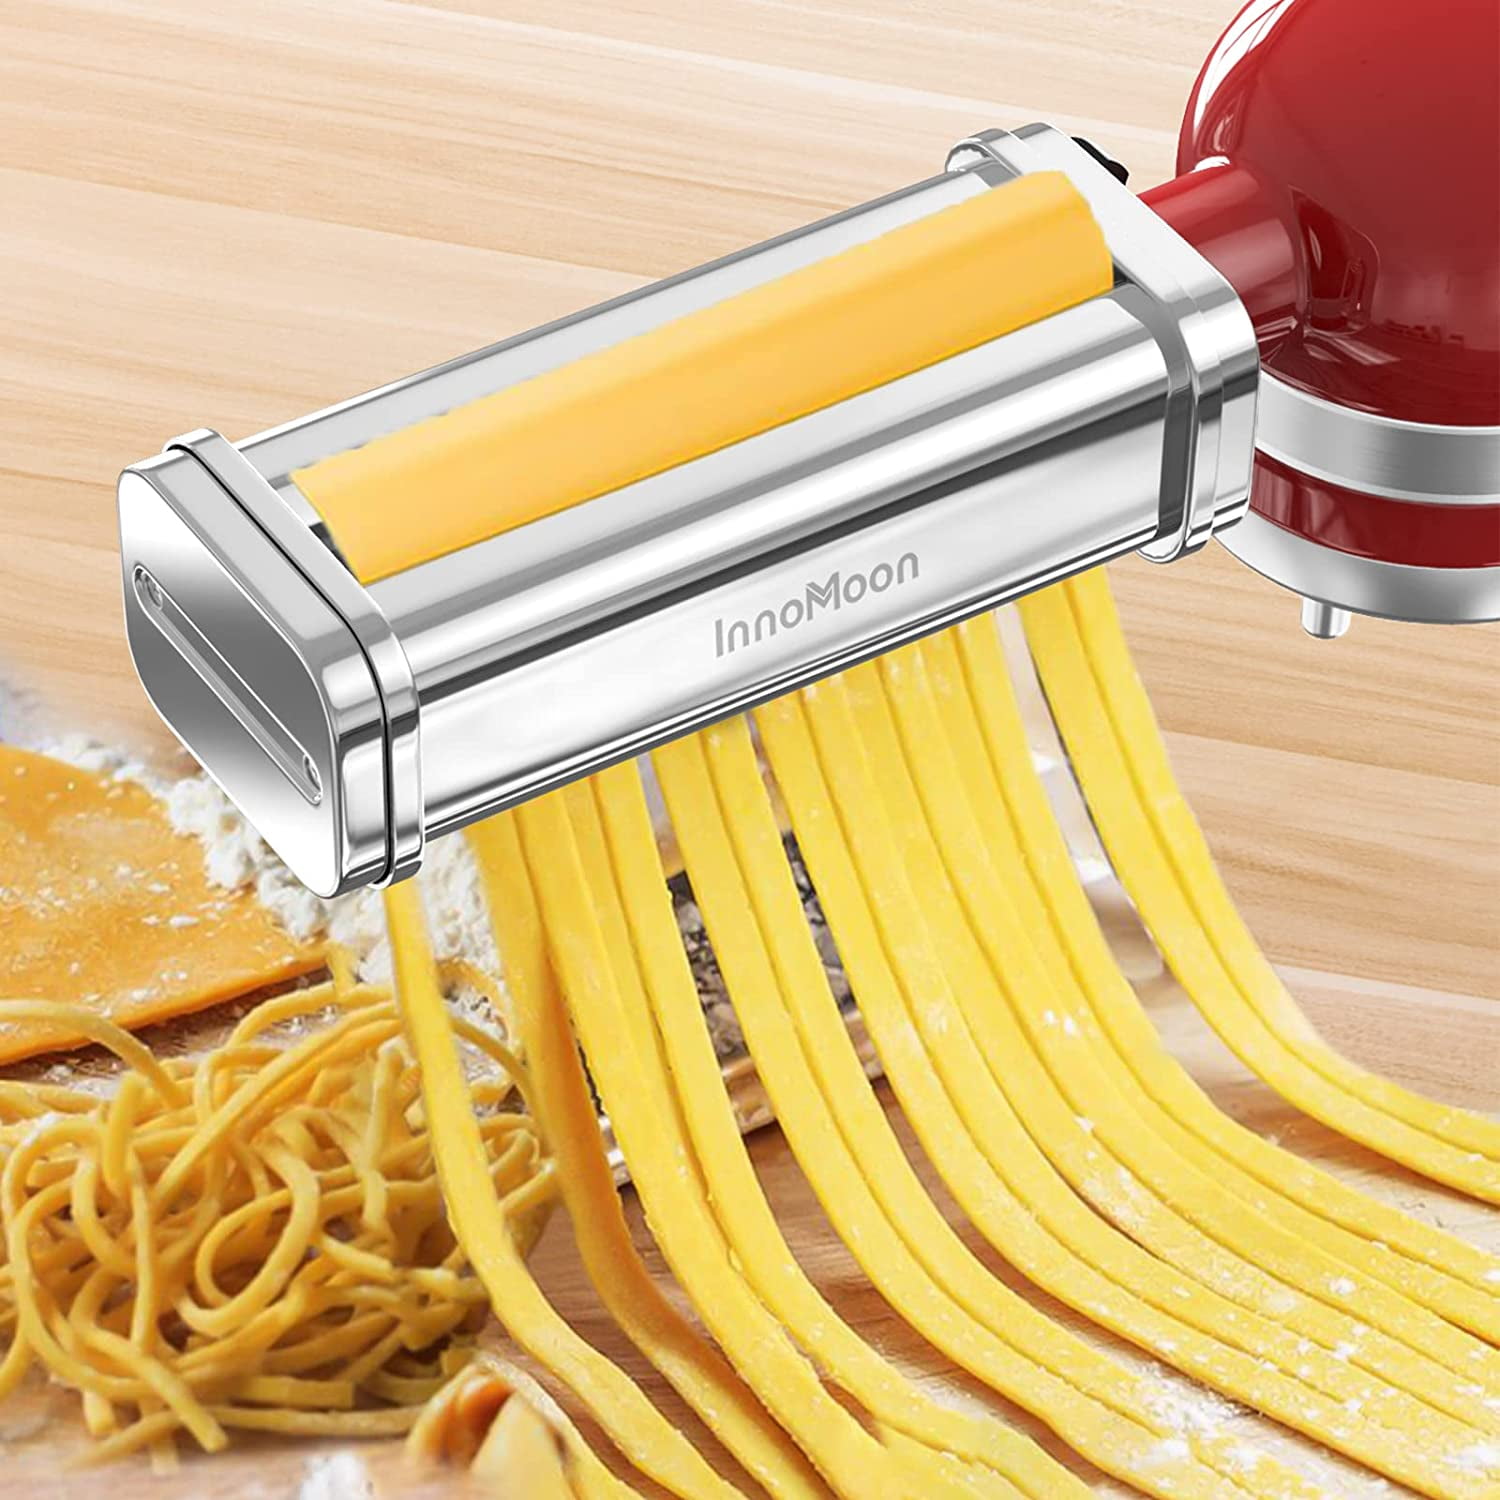 Kenome Pasta Maker Attachment 3 in 1 Set for KitchenAid Stand